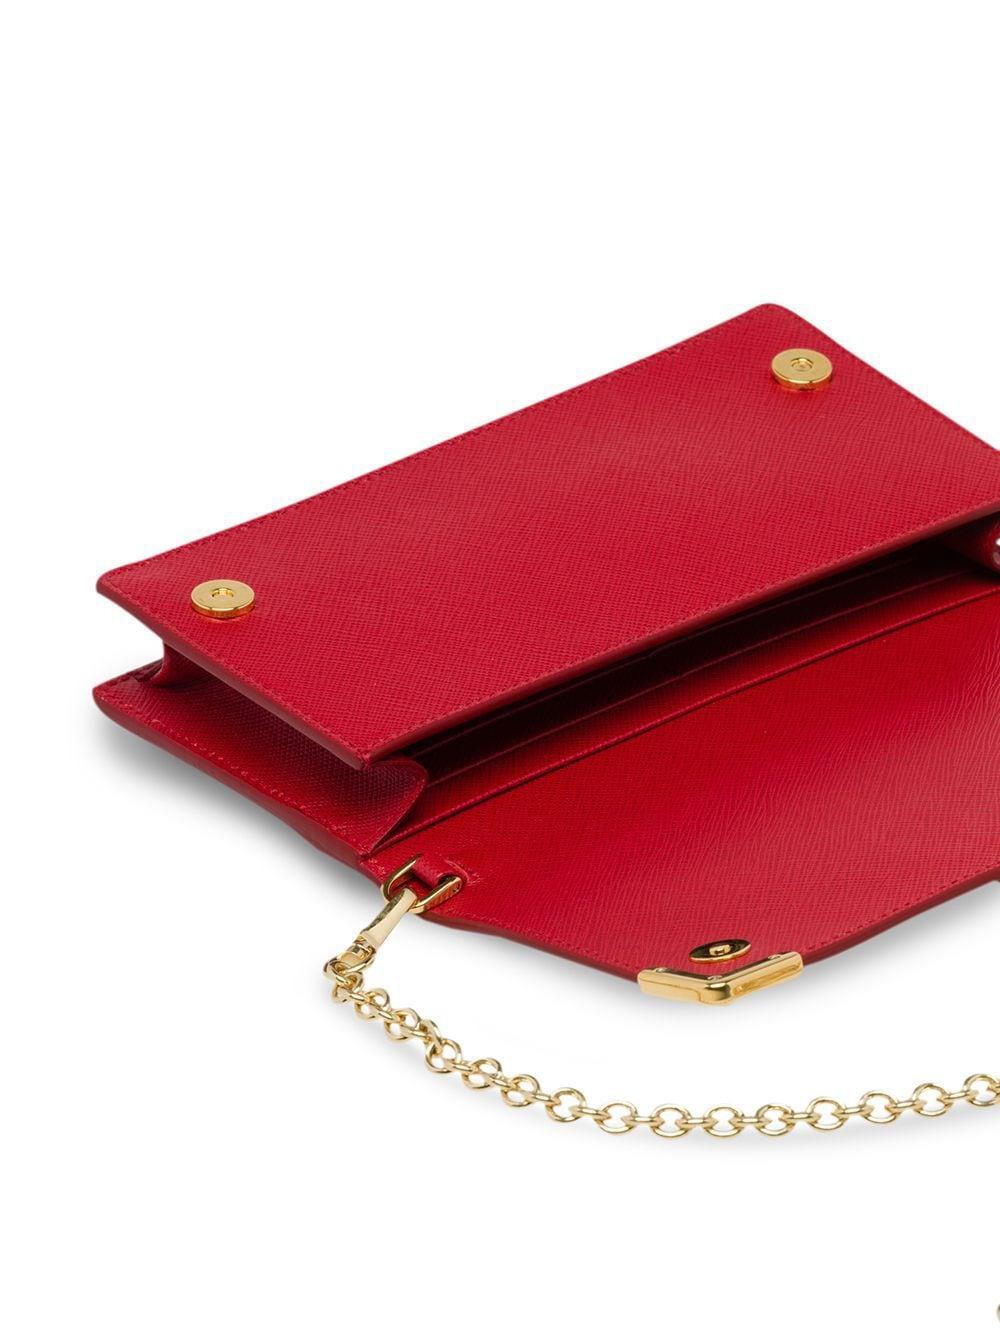 Prada Cahier Saffiano Mini Cross-body Bag in Red | Lyst